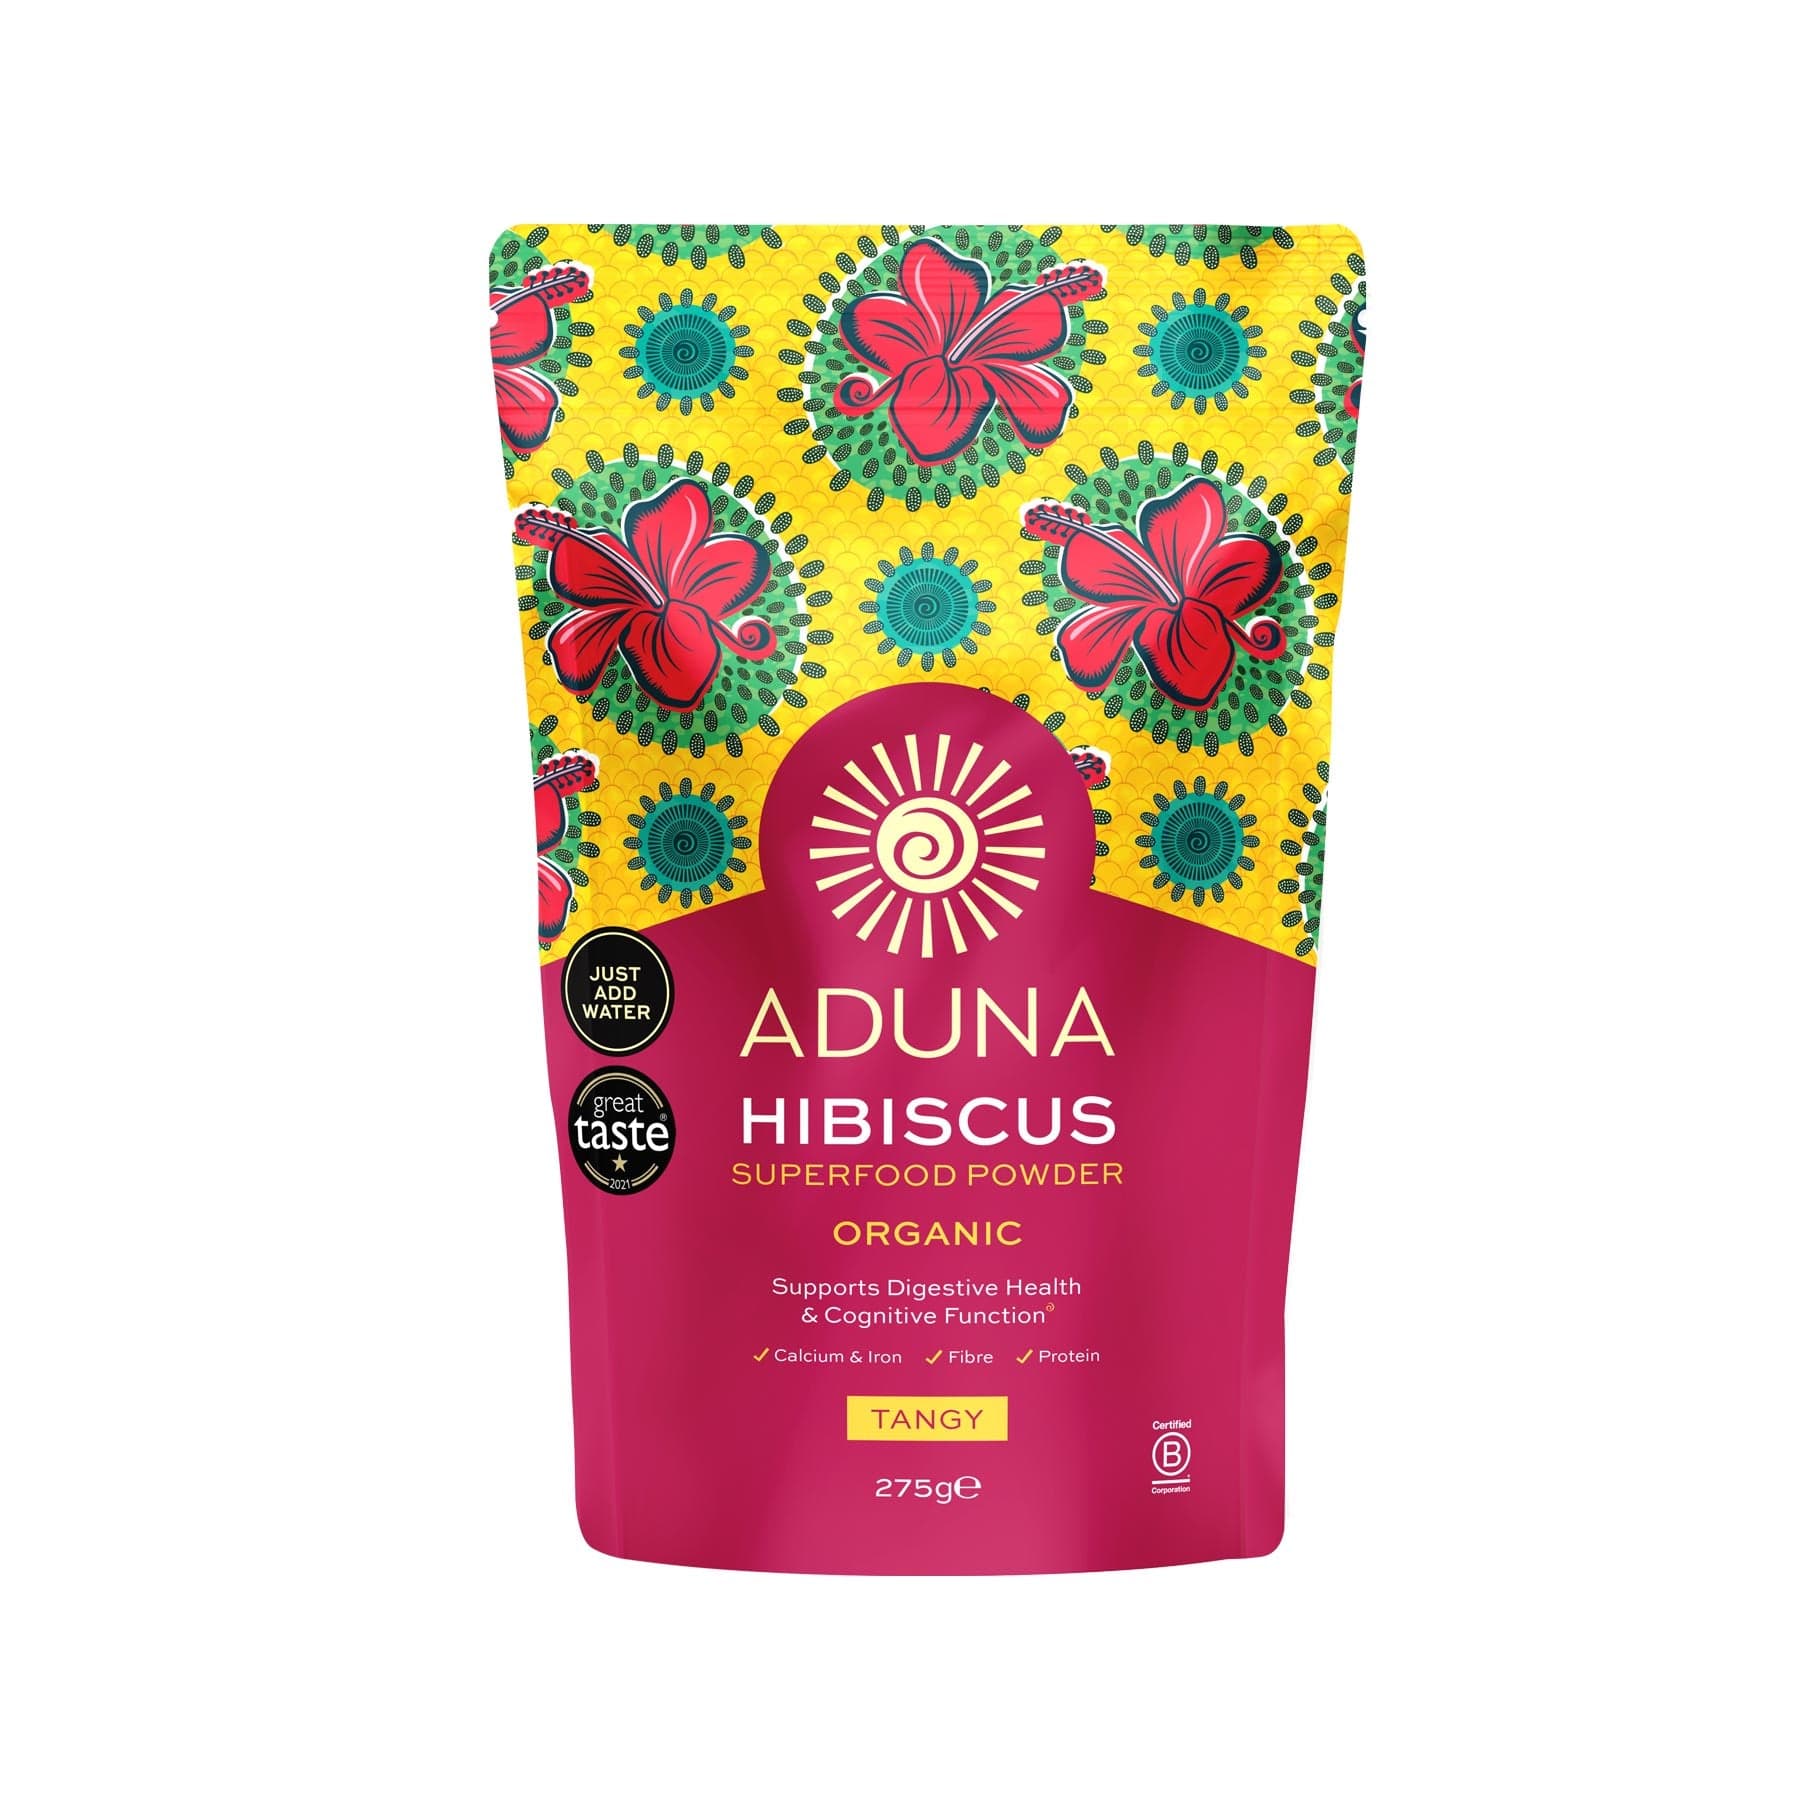 Hibiscus superfood powder 275g